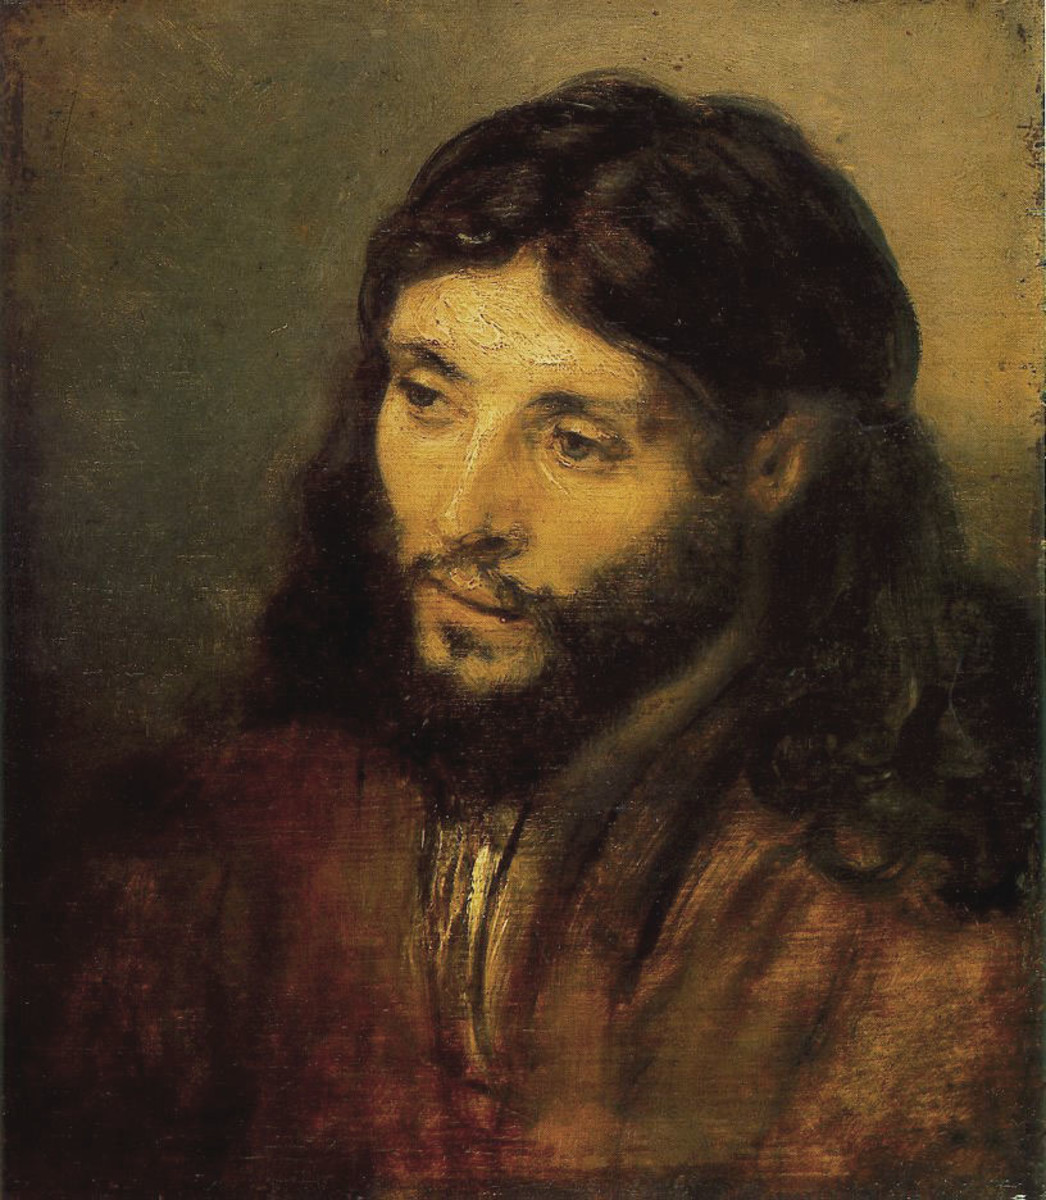 Jesus by Rembrandt